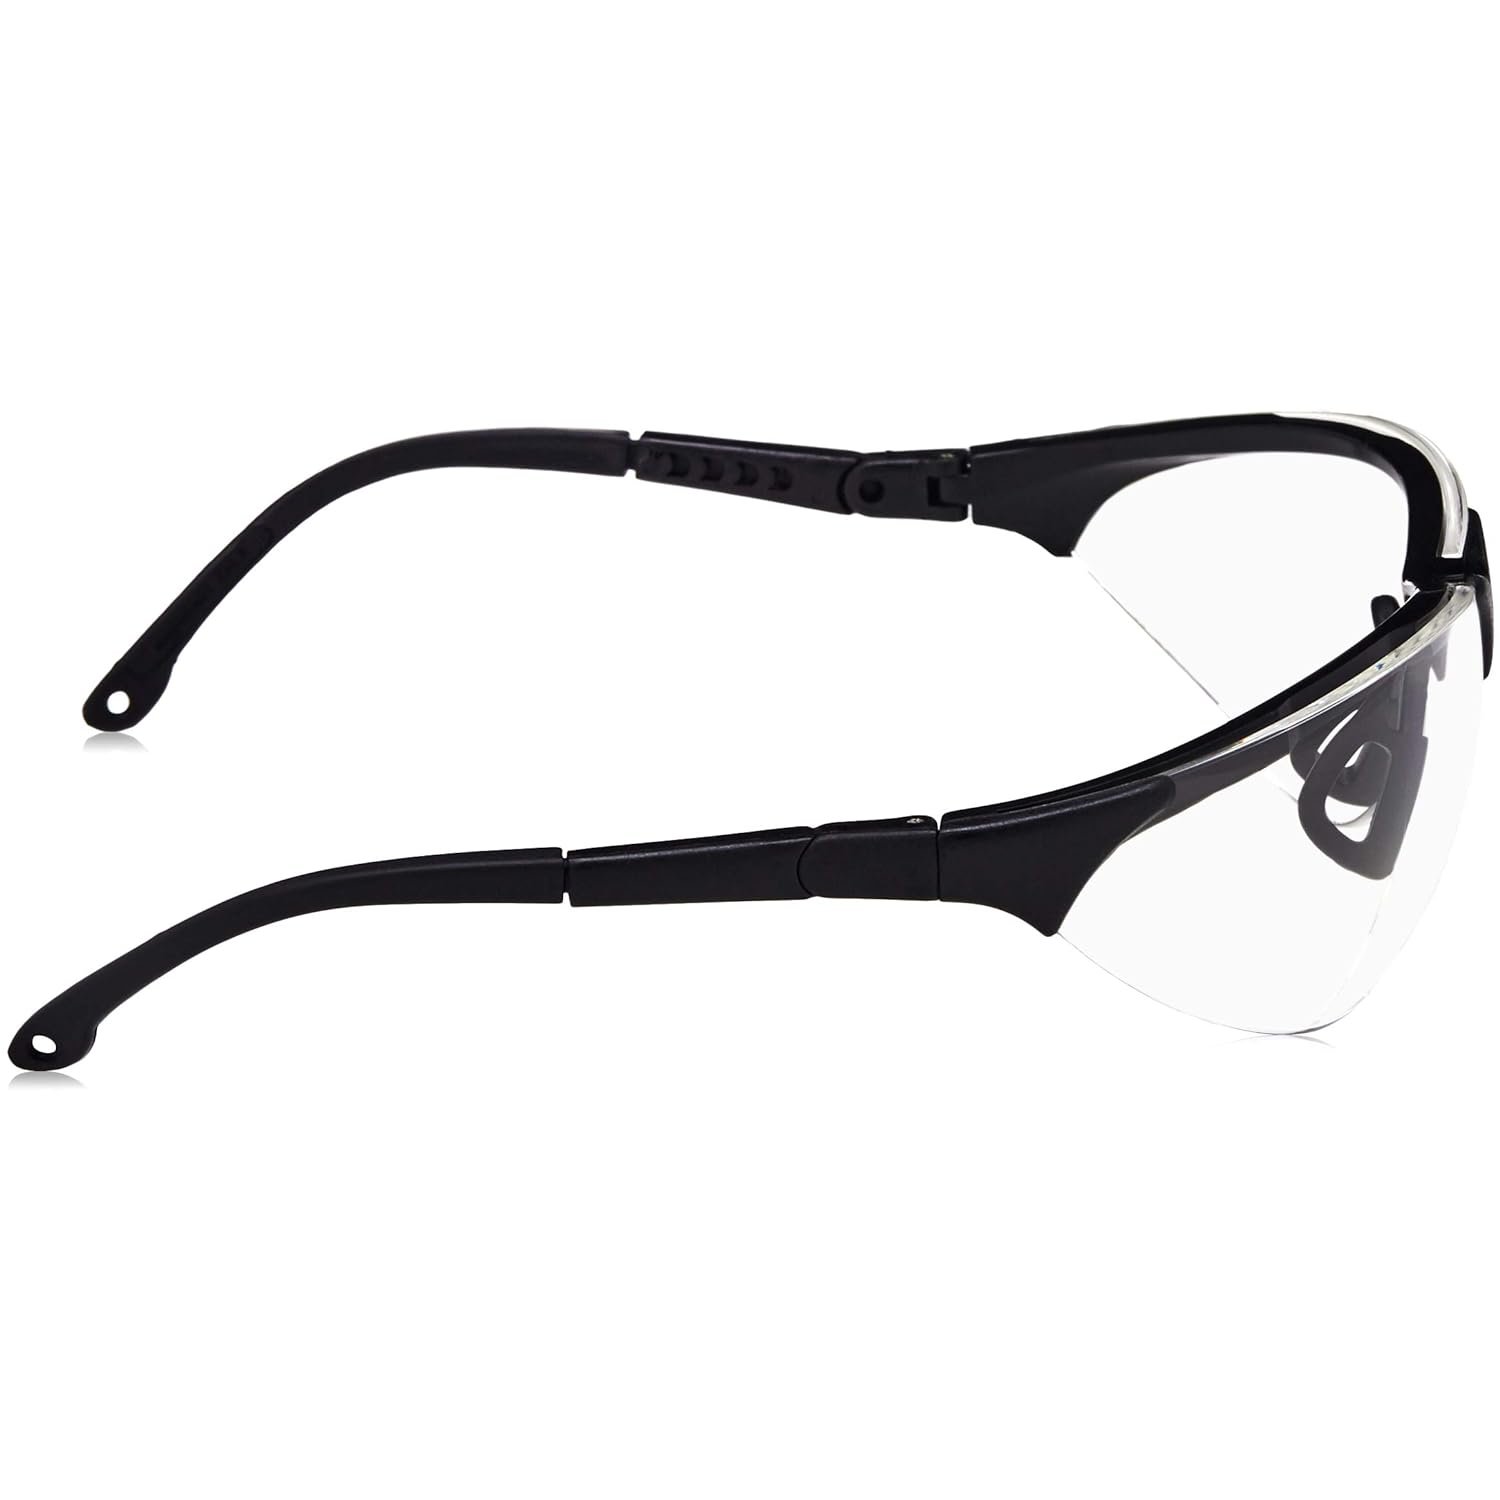 Amazon Basics Anti-Fog Shooting Safety Glasses Eye Protection Review